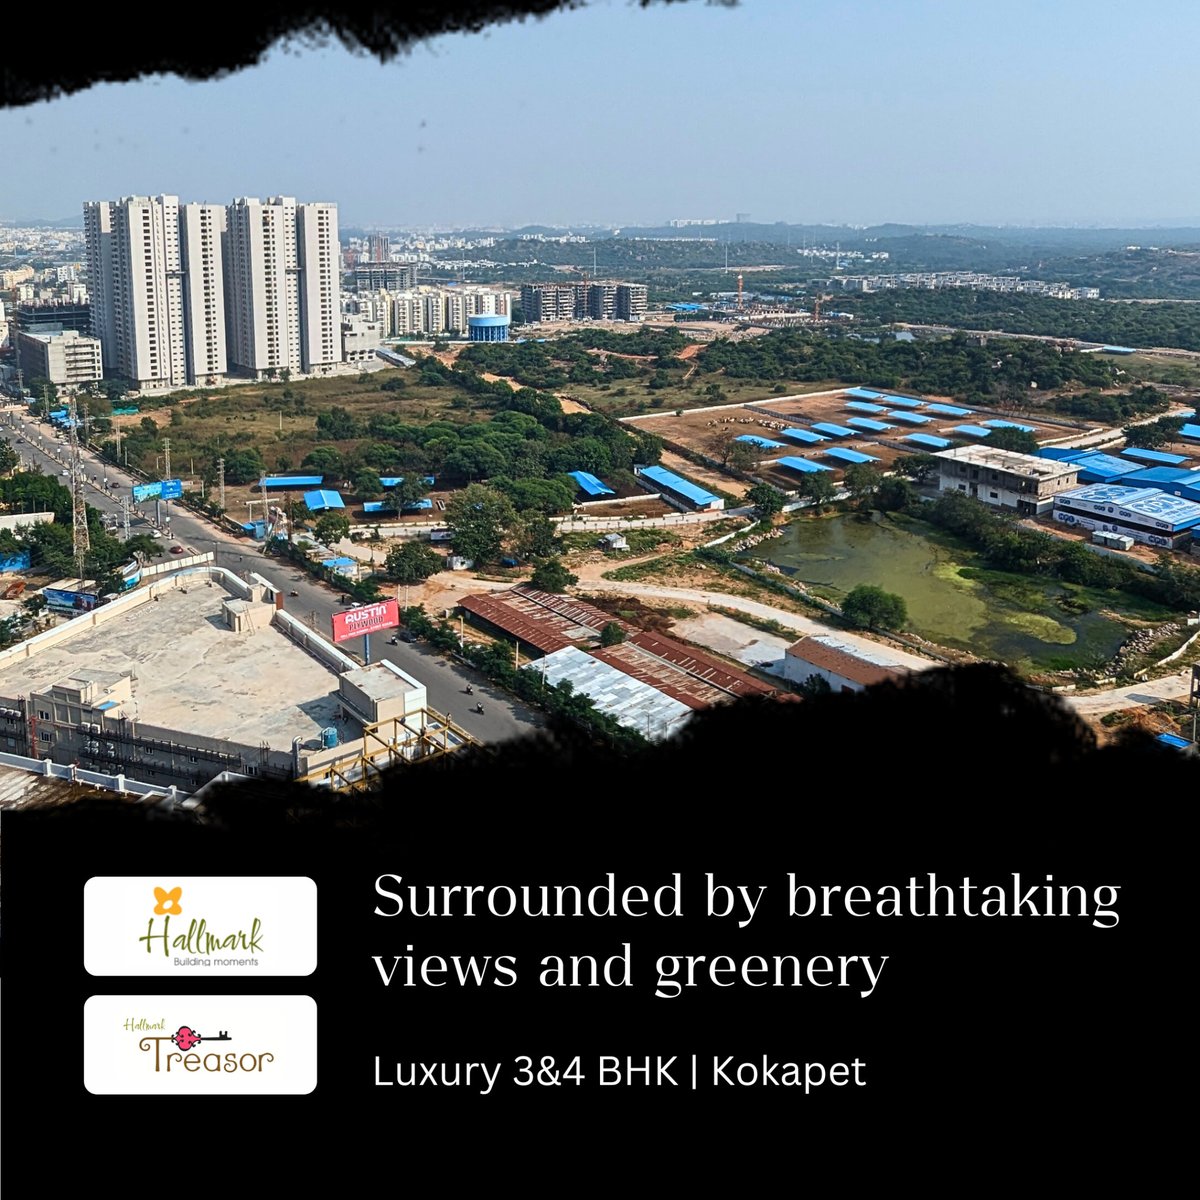 Experience views on views at Hallmark Treasor! 
Weather you wish to wake up to lush green vistas or stunning lake panoramas - take your pick! 

#HallmarkTreasor #LuxuryApartment #Kokapet #Hyderabad #HallmarkBuilders